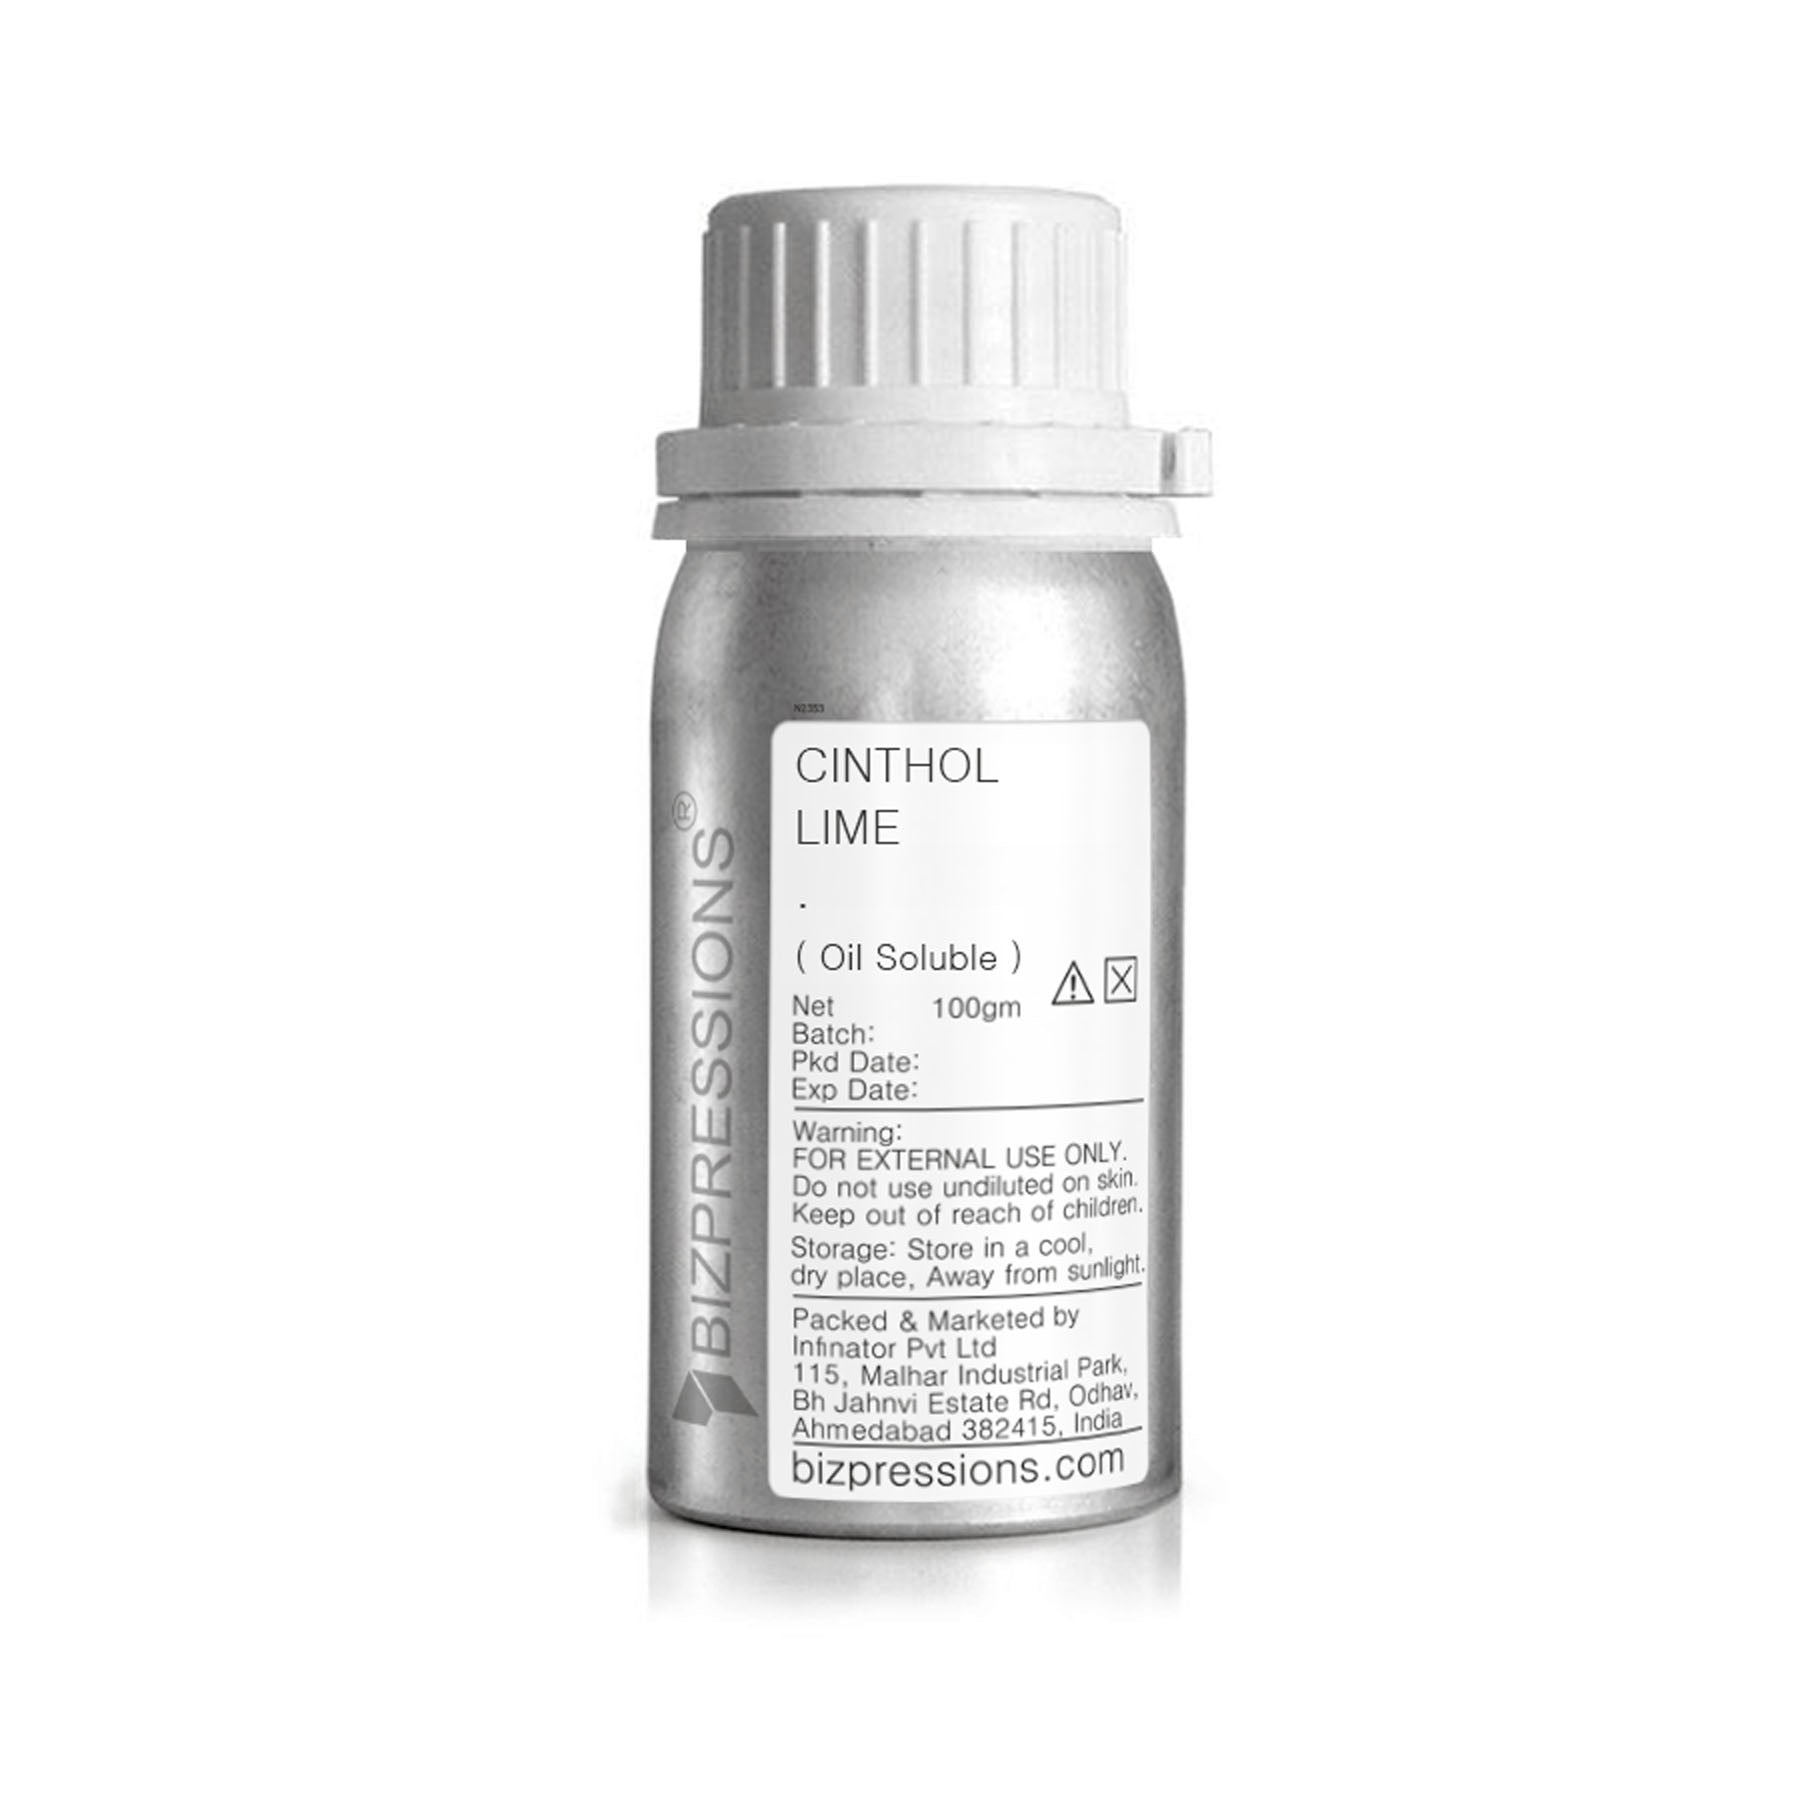 CINTHOL LIME - Fragrance ( Oil Soluble ) - 100 gm